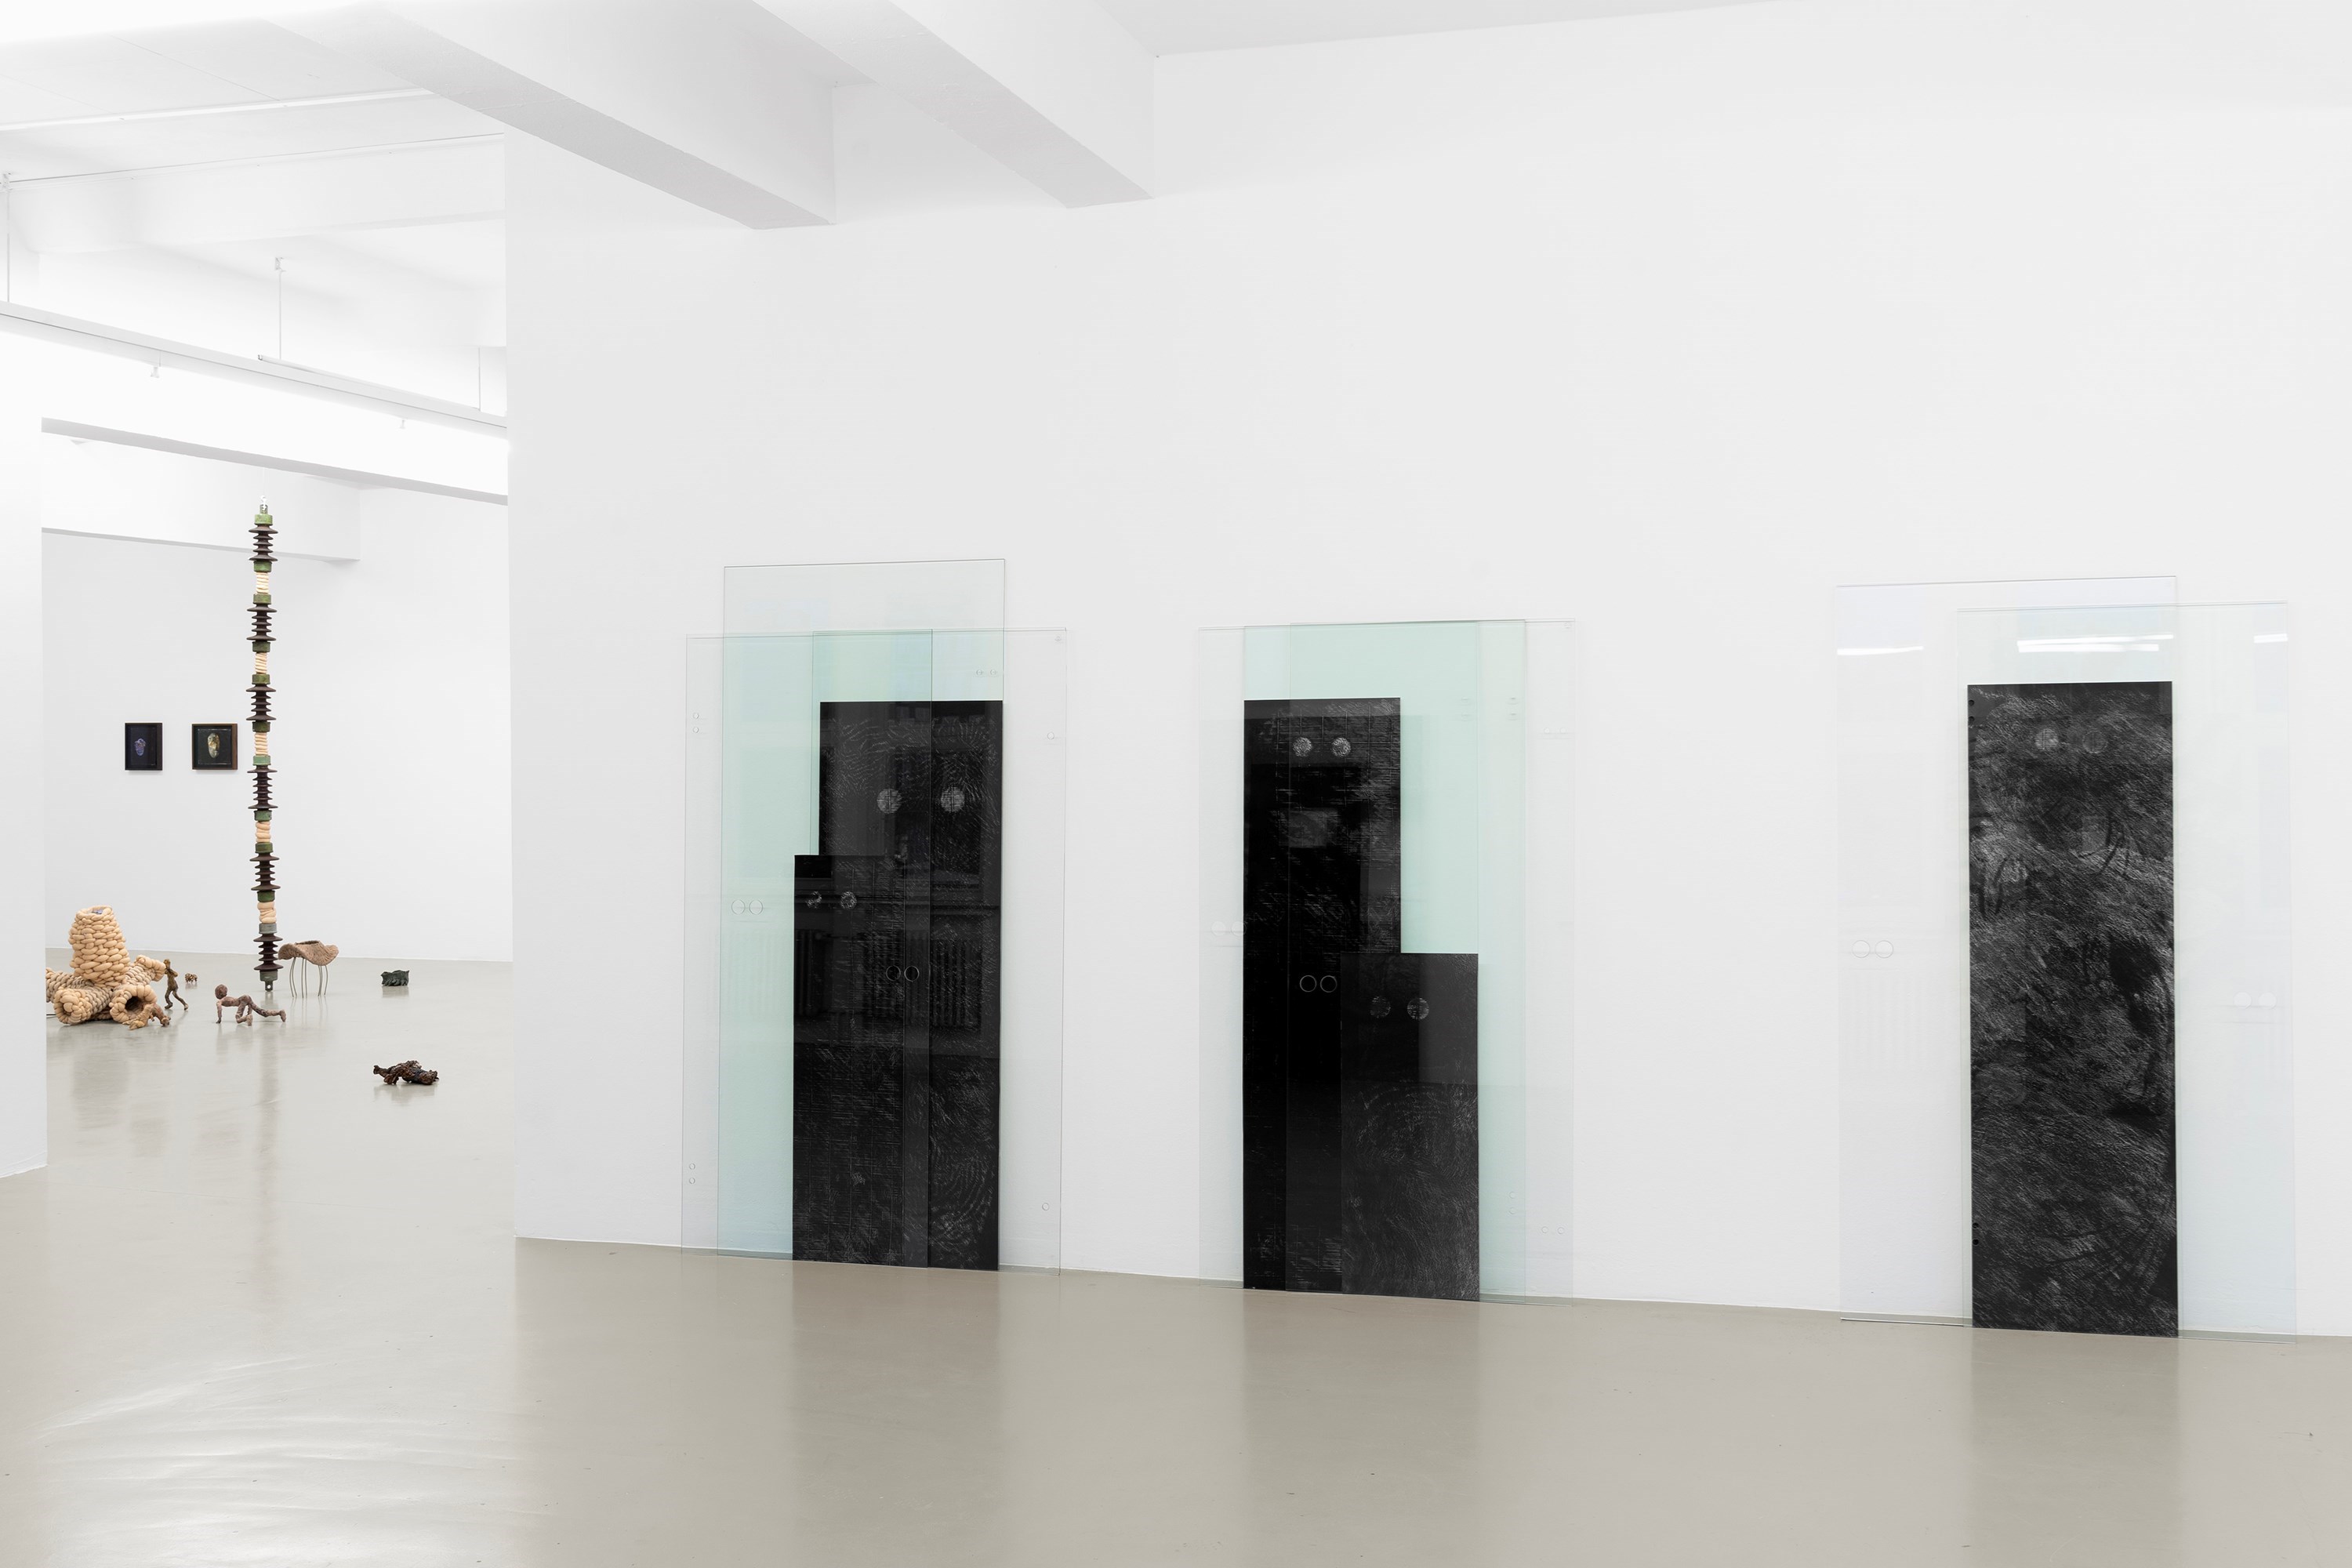 ohne Titel I-IV, silver gelatin photograms between glas doors, measurements between 195 cm x 72 cm and 216 cm x 90 cm, 2020